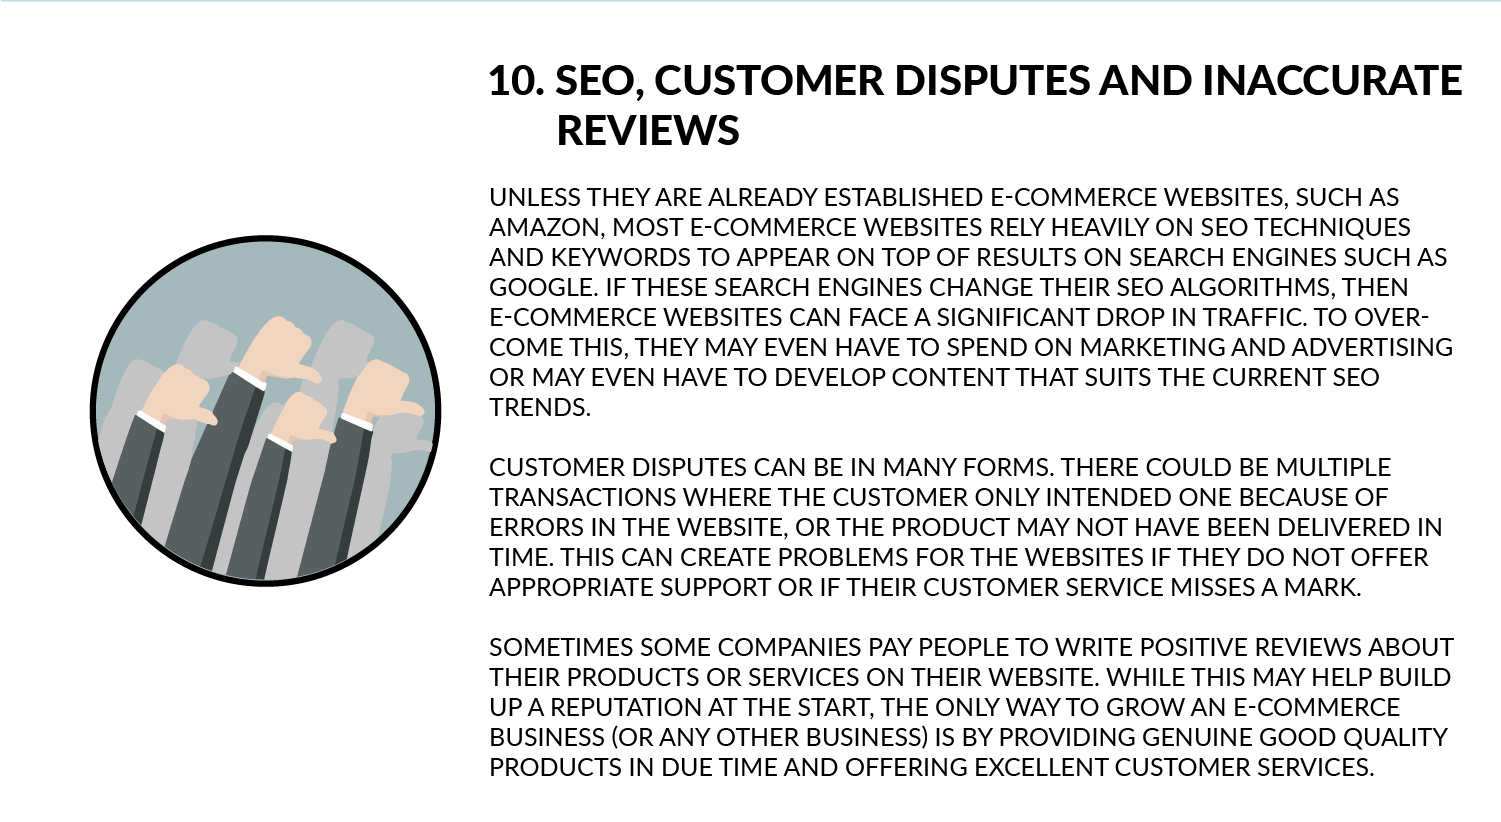 SEO, Customer Disputes and Inaccurate Reviews